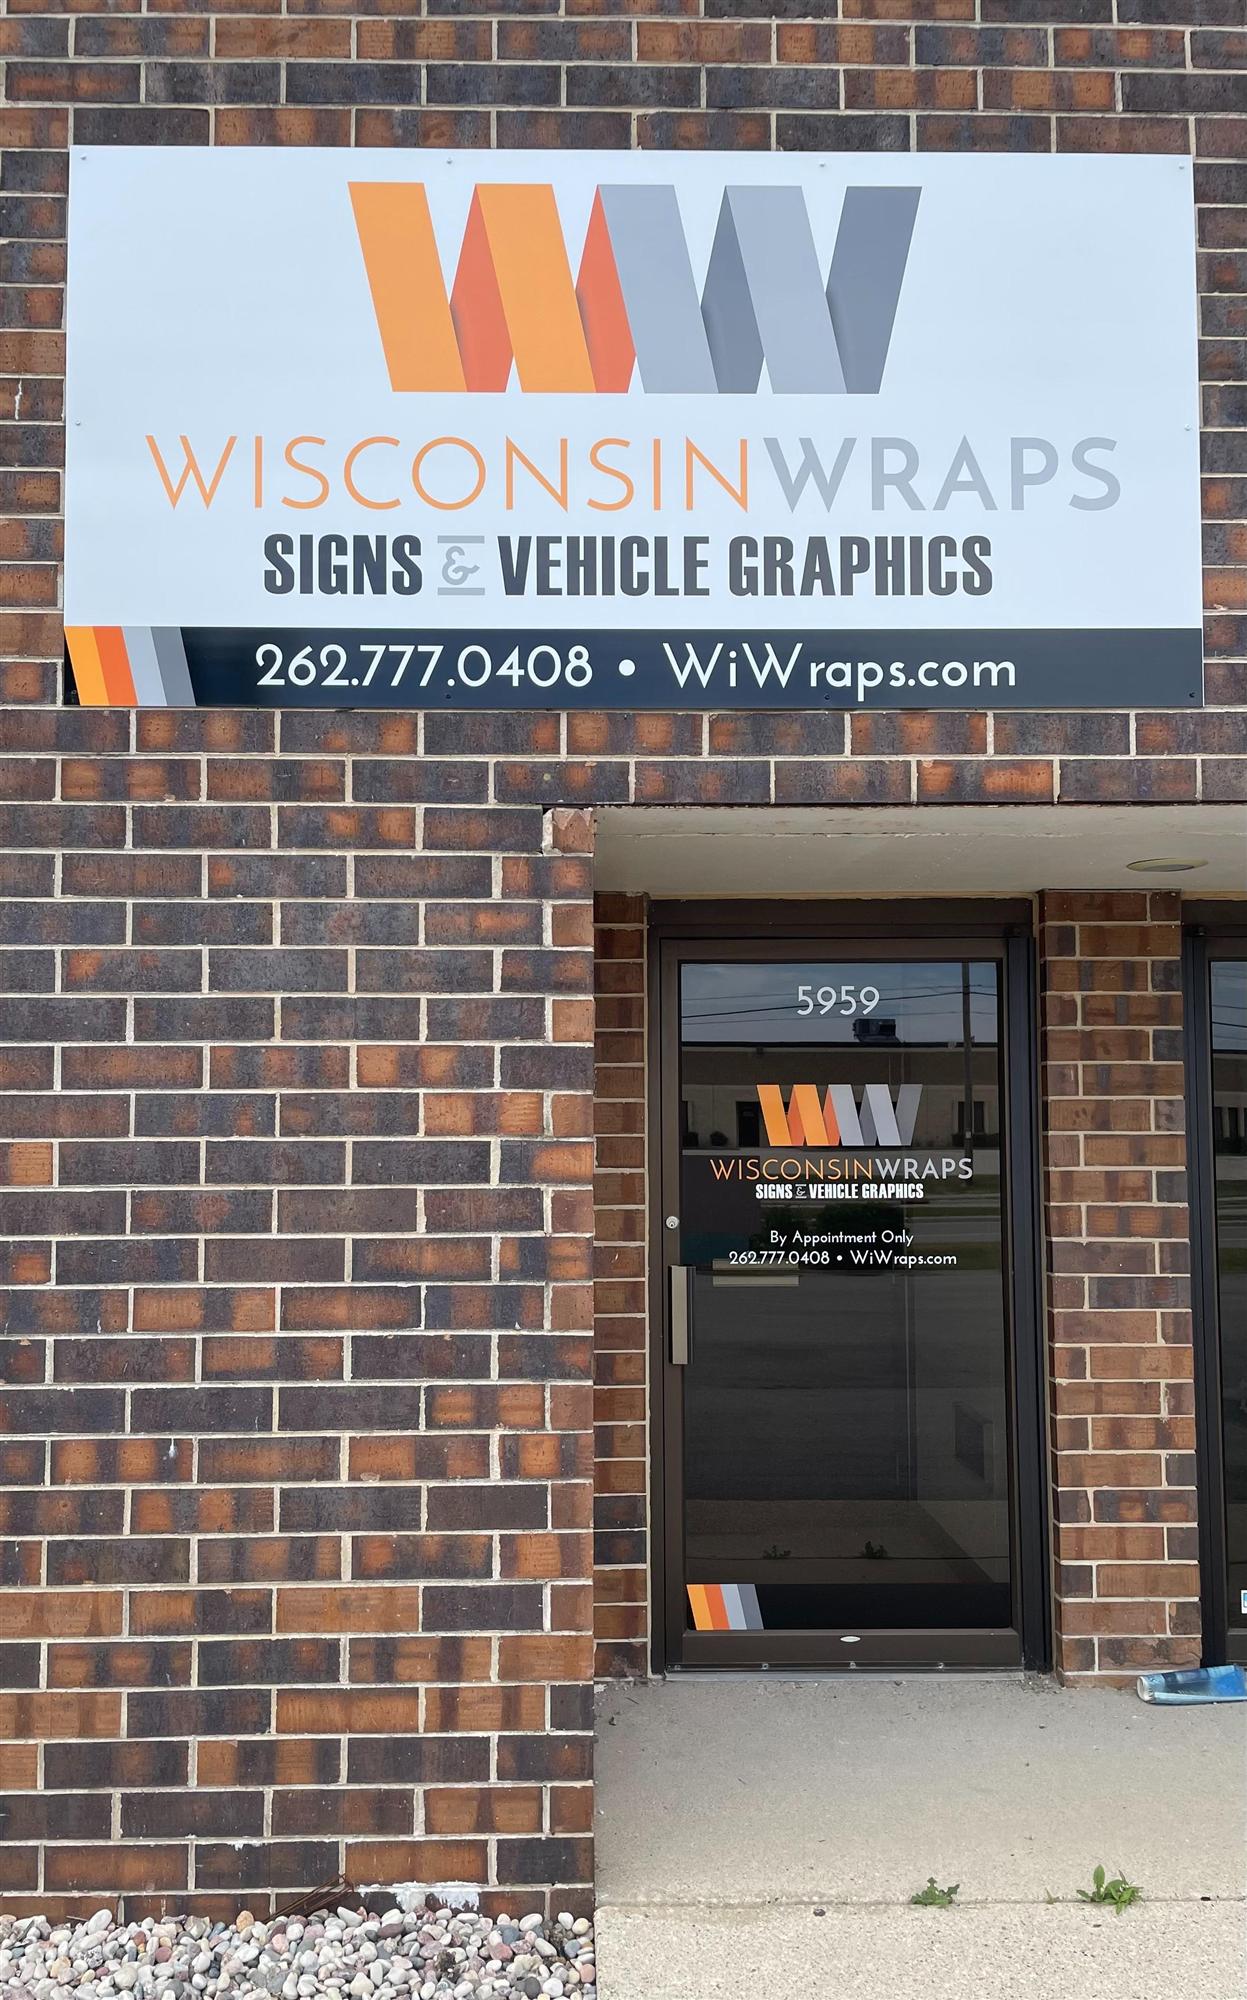 Wisconsin Wraps Business Location in Menomonee Falls, Wisconsin